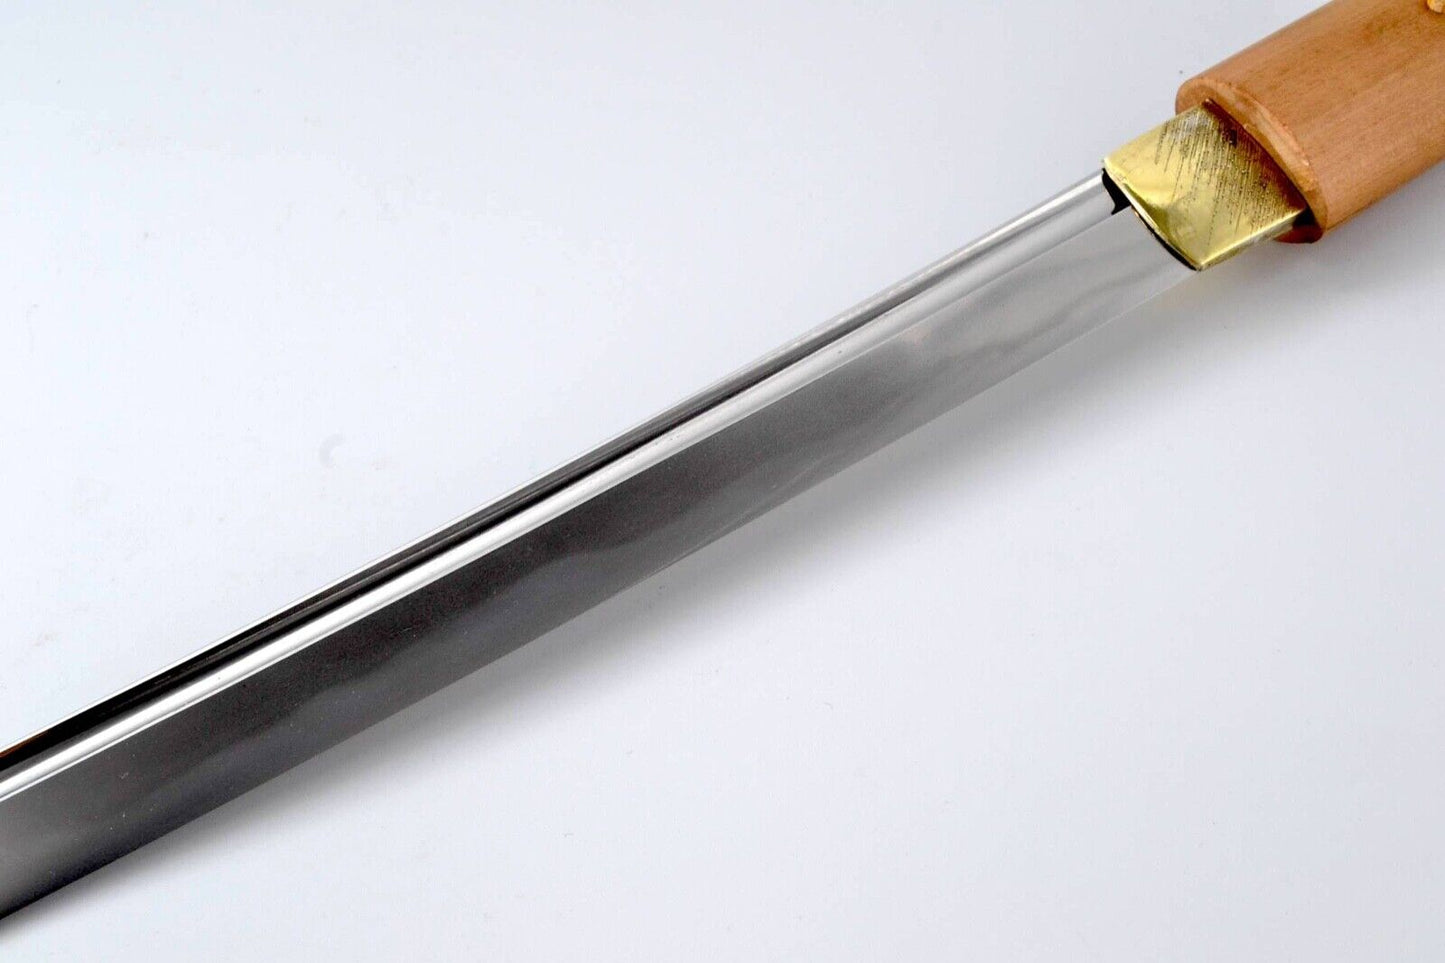 Muromachi Era Samurai Legacy Tachi Sword Collectible Japanese Weapon Blade Tamahagane.